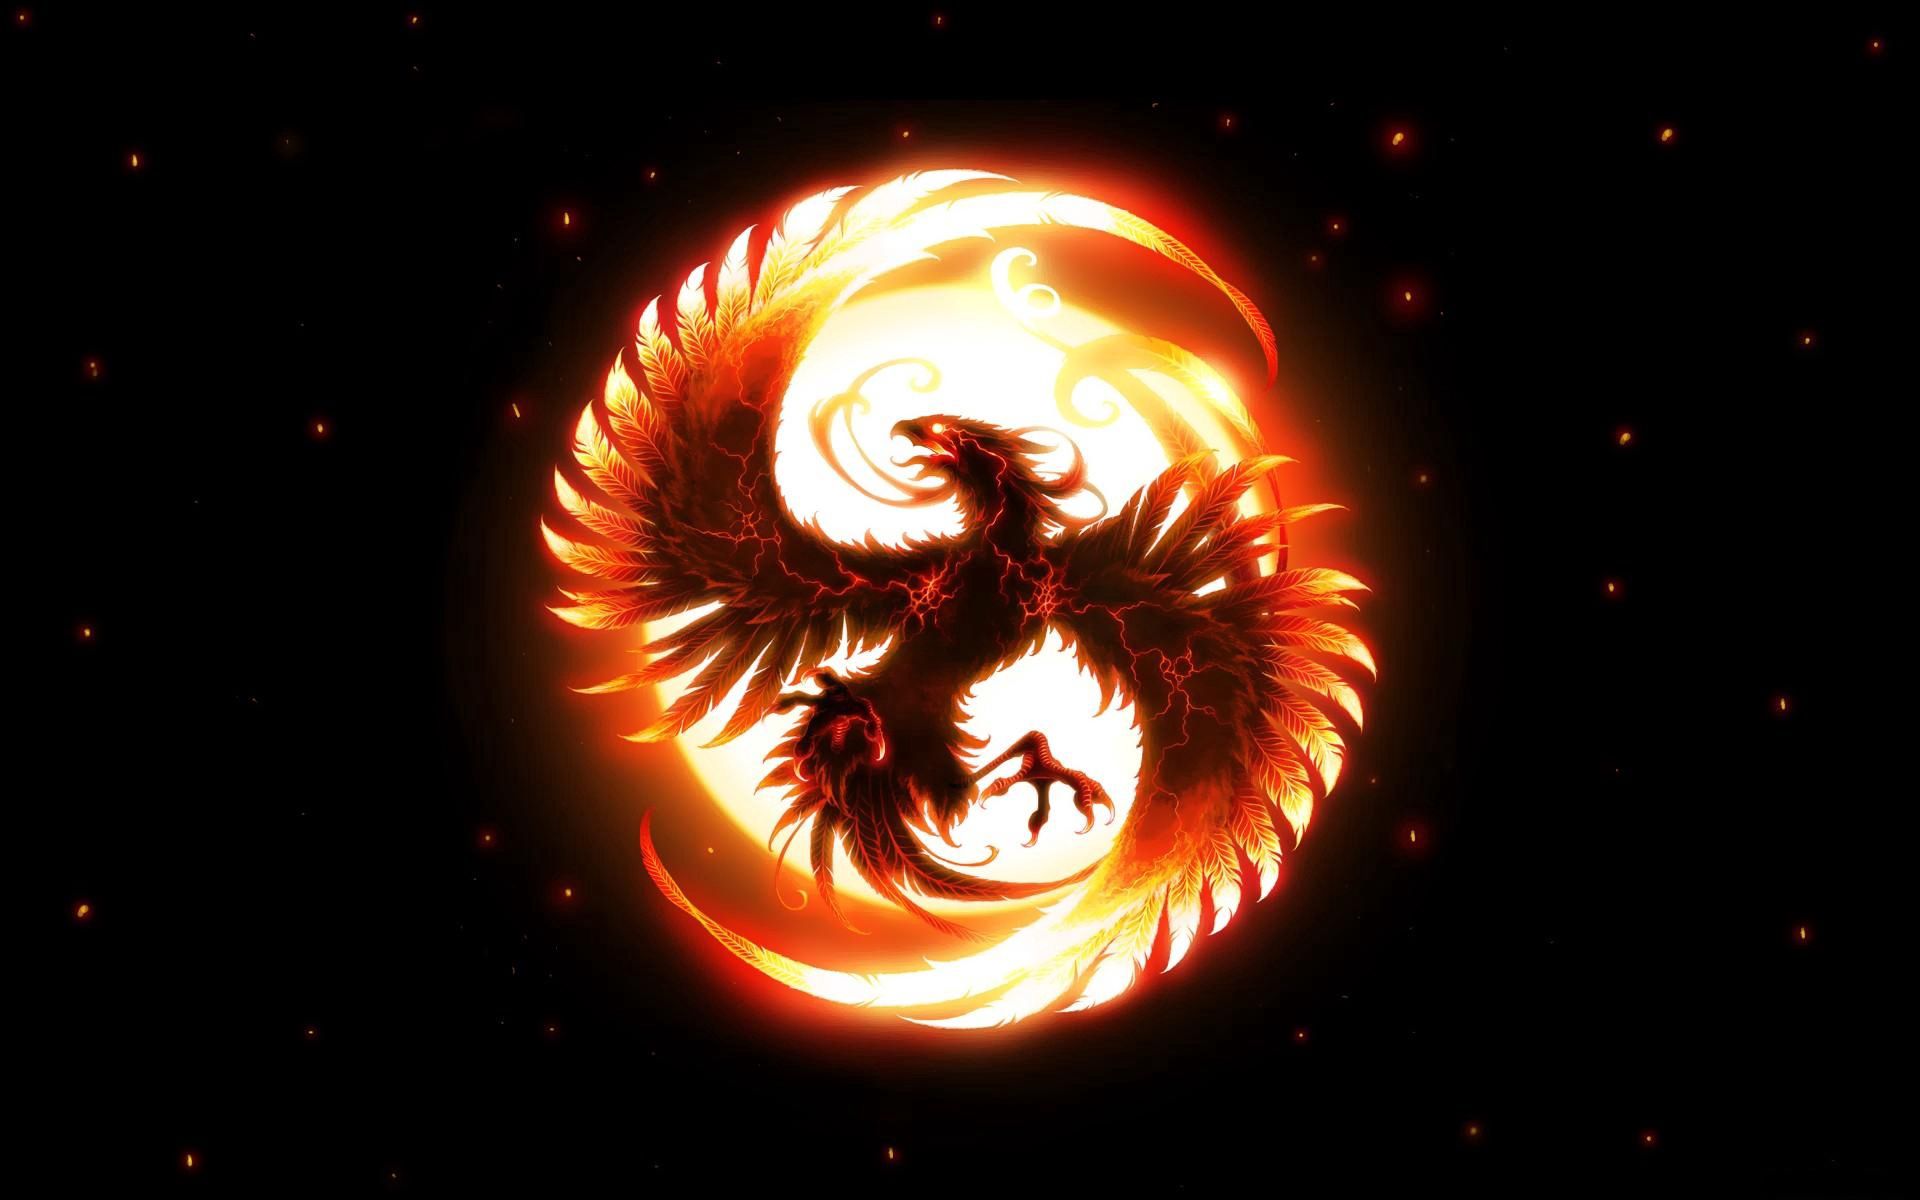 Popular Phoenix Image for Phone